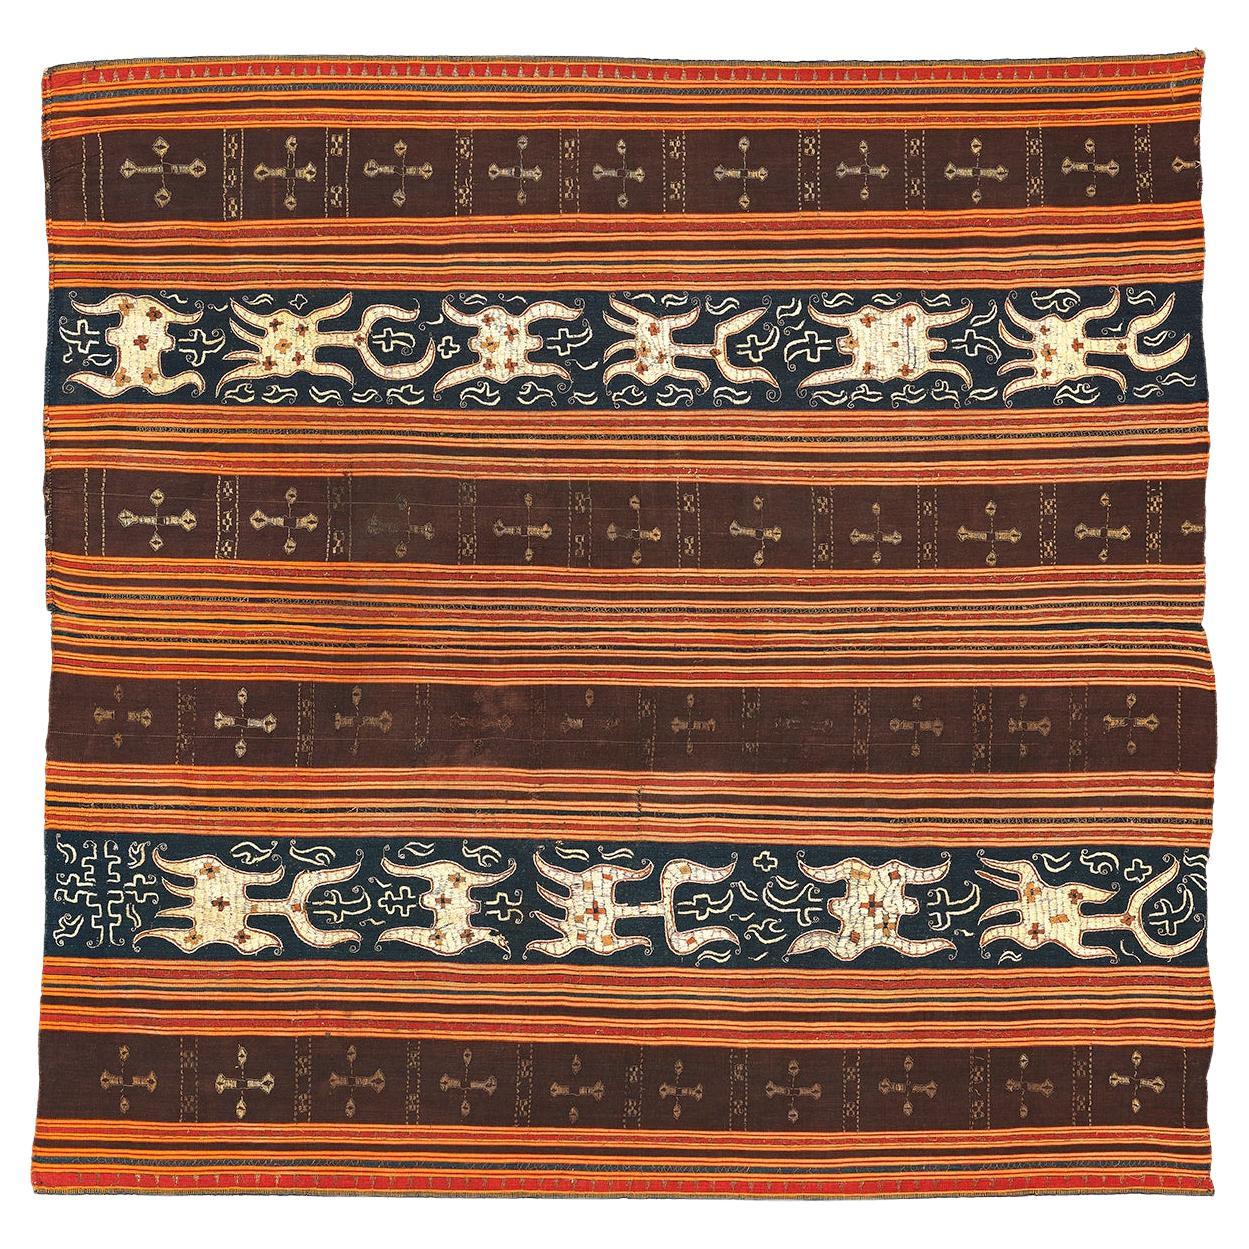 Textile cérémoniel indonésien ancien, peuple Lampung, Sumatra